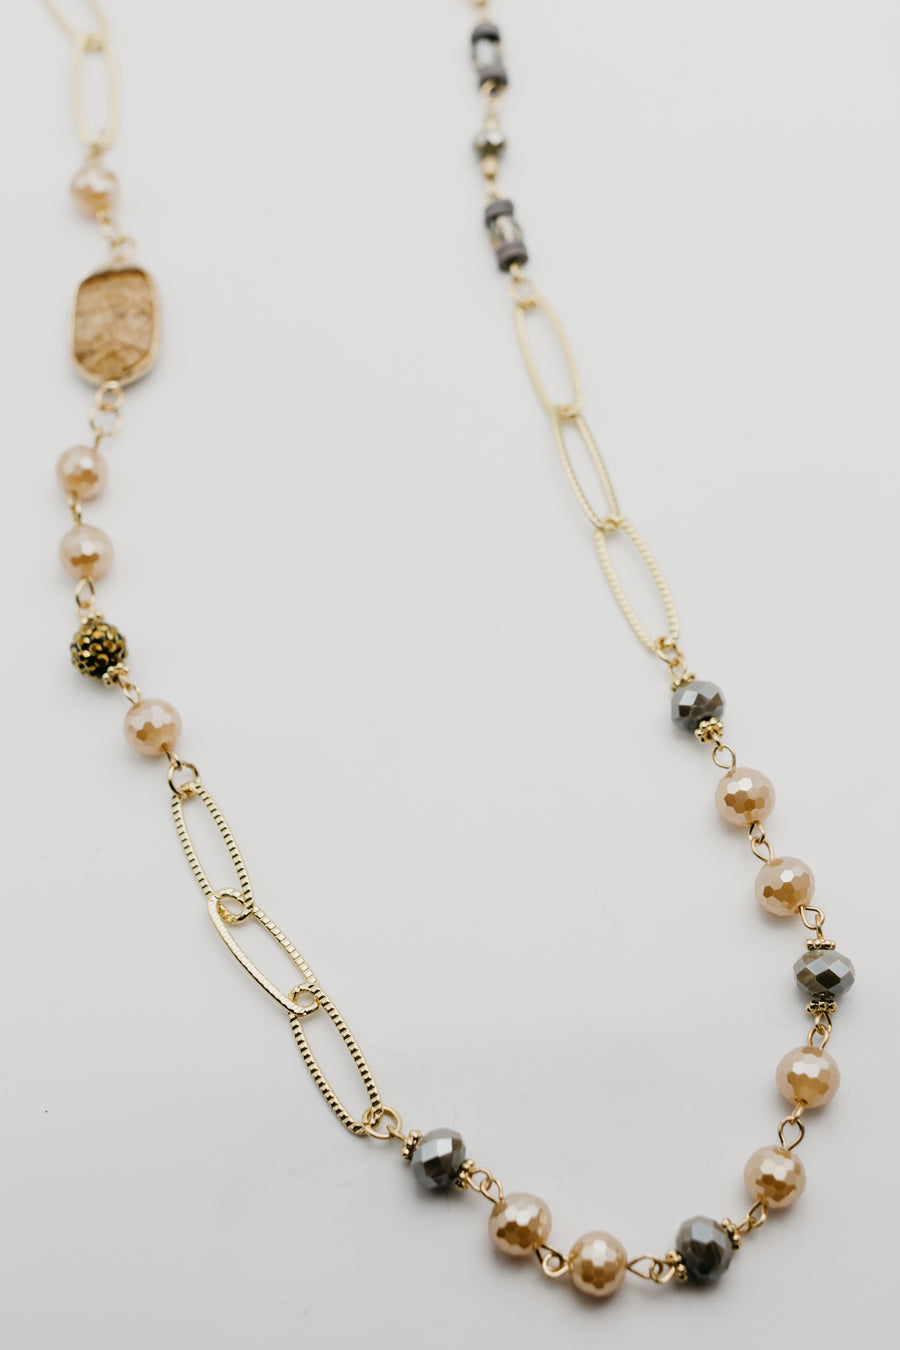 The Daria Stone Bead Necklace